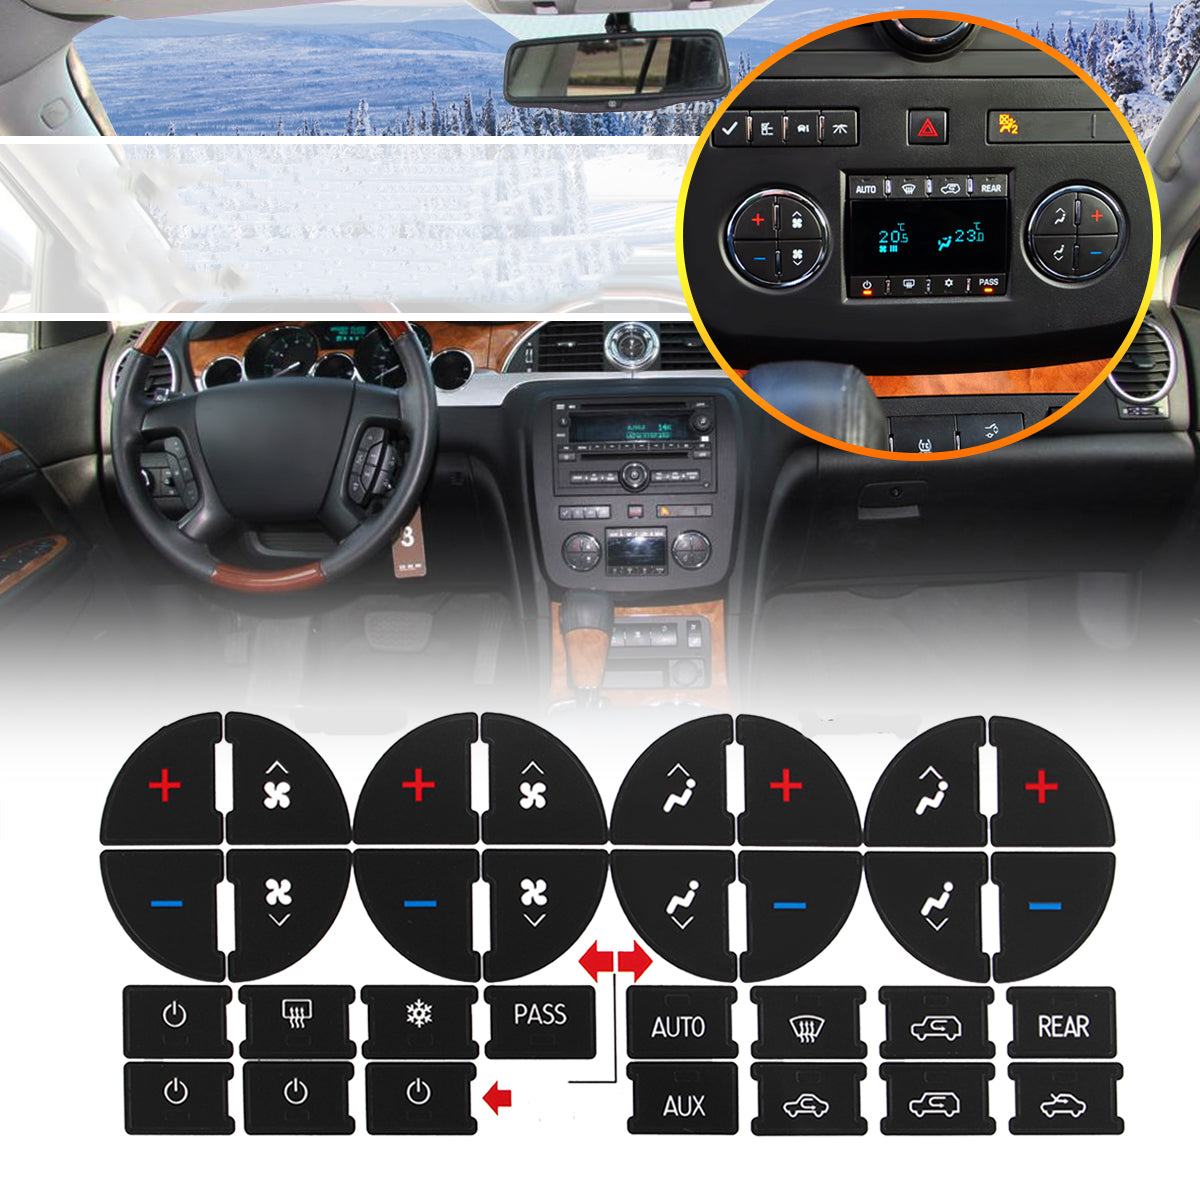 Black AC Dash Button Repair Kit Car PVC Decals Sticker For General Motors SUV Trucks